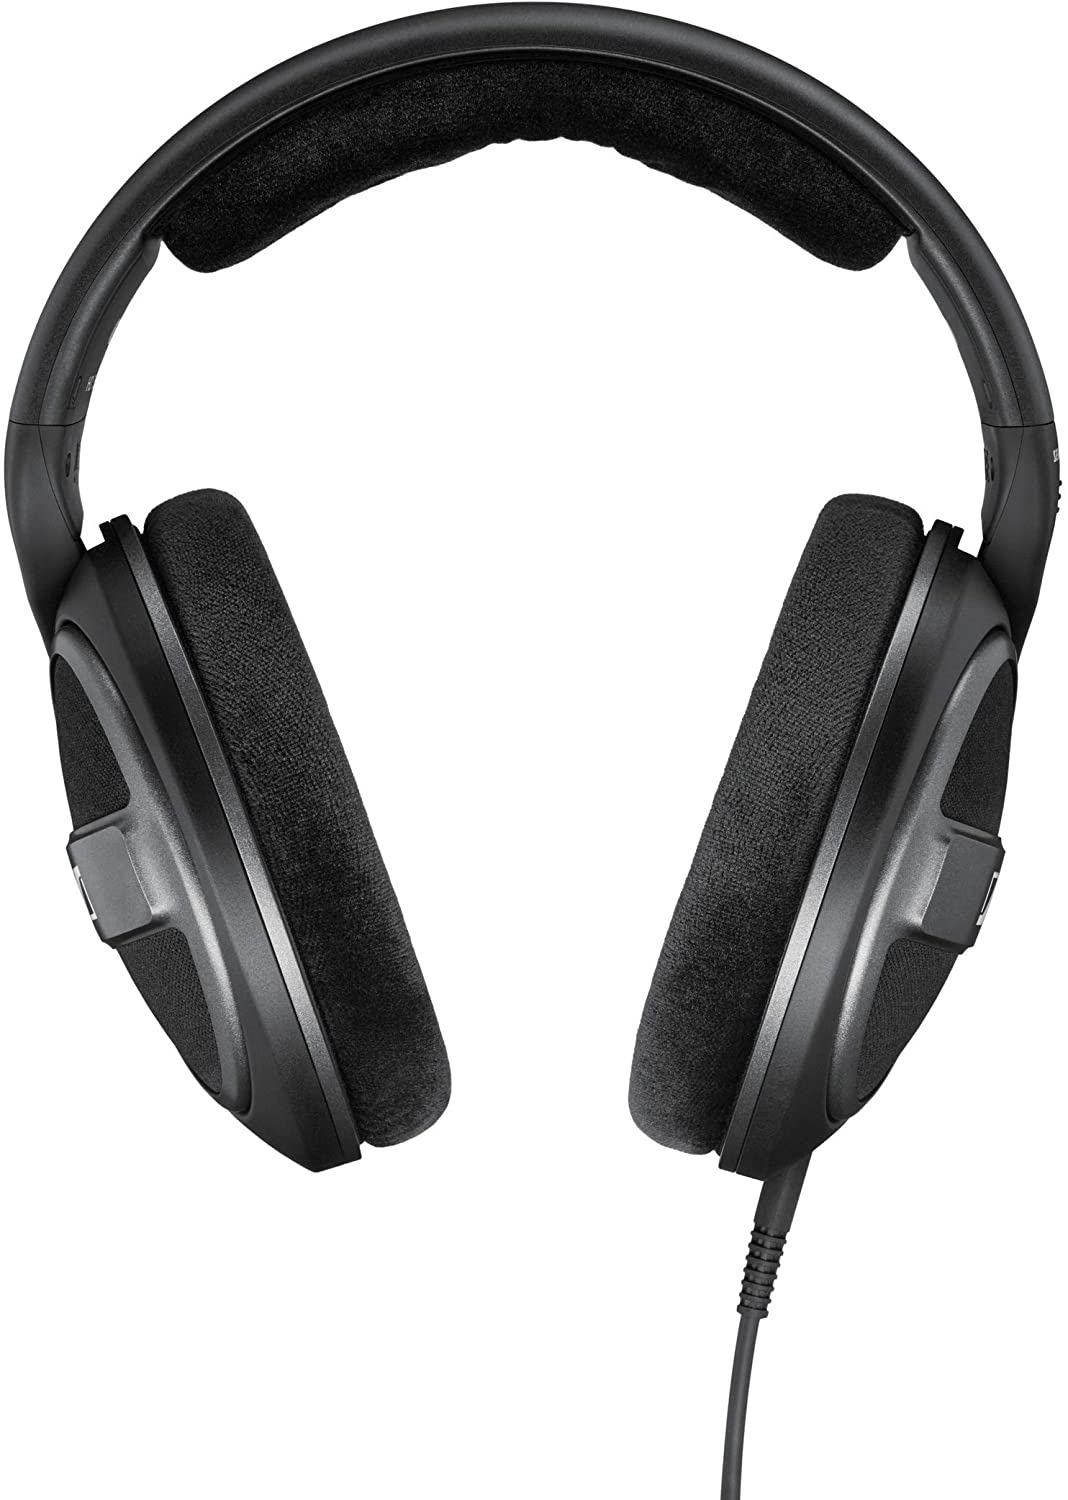 Sennheiser HD 559 Open-Back Headphones swivel